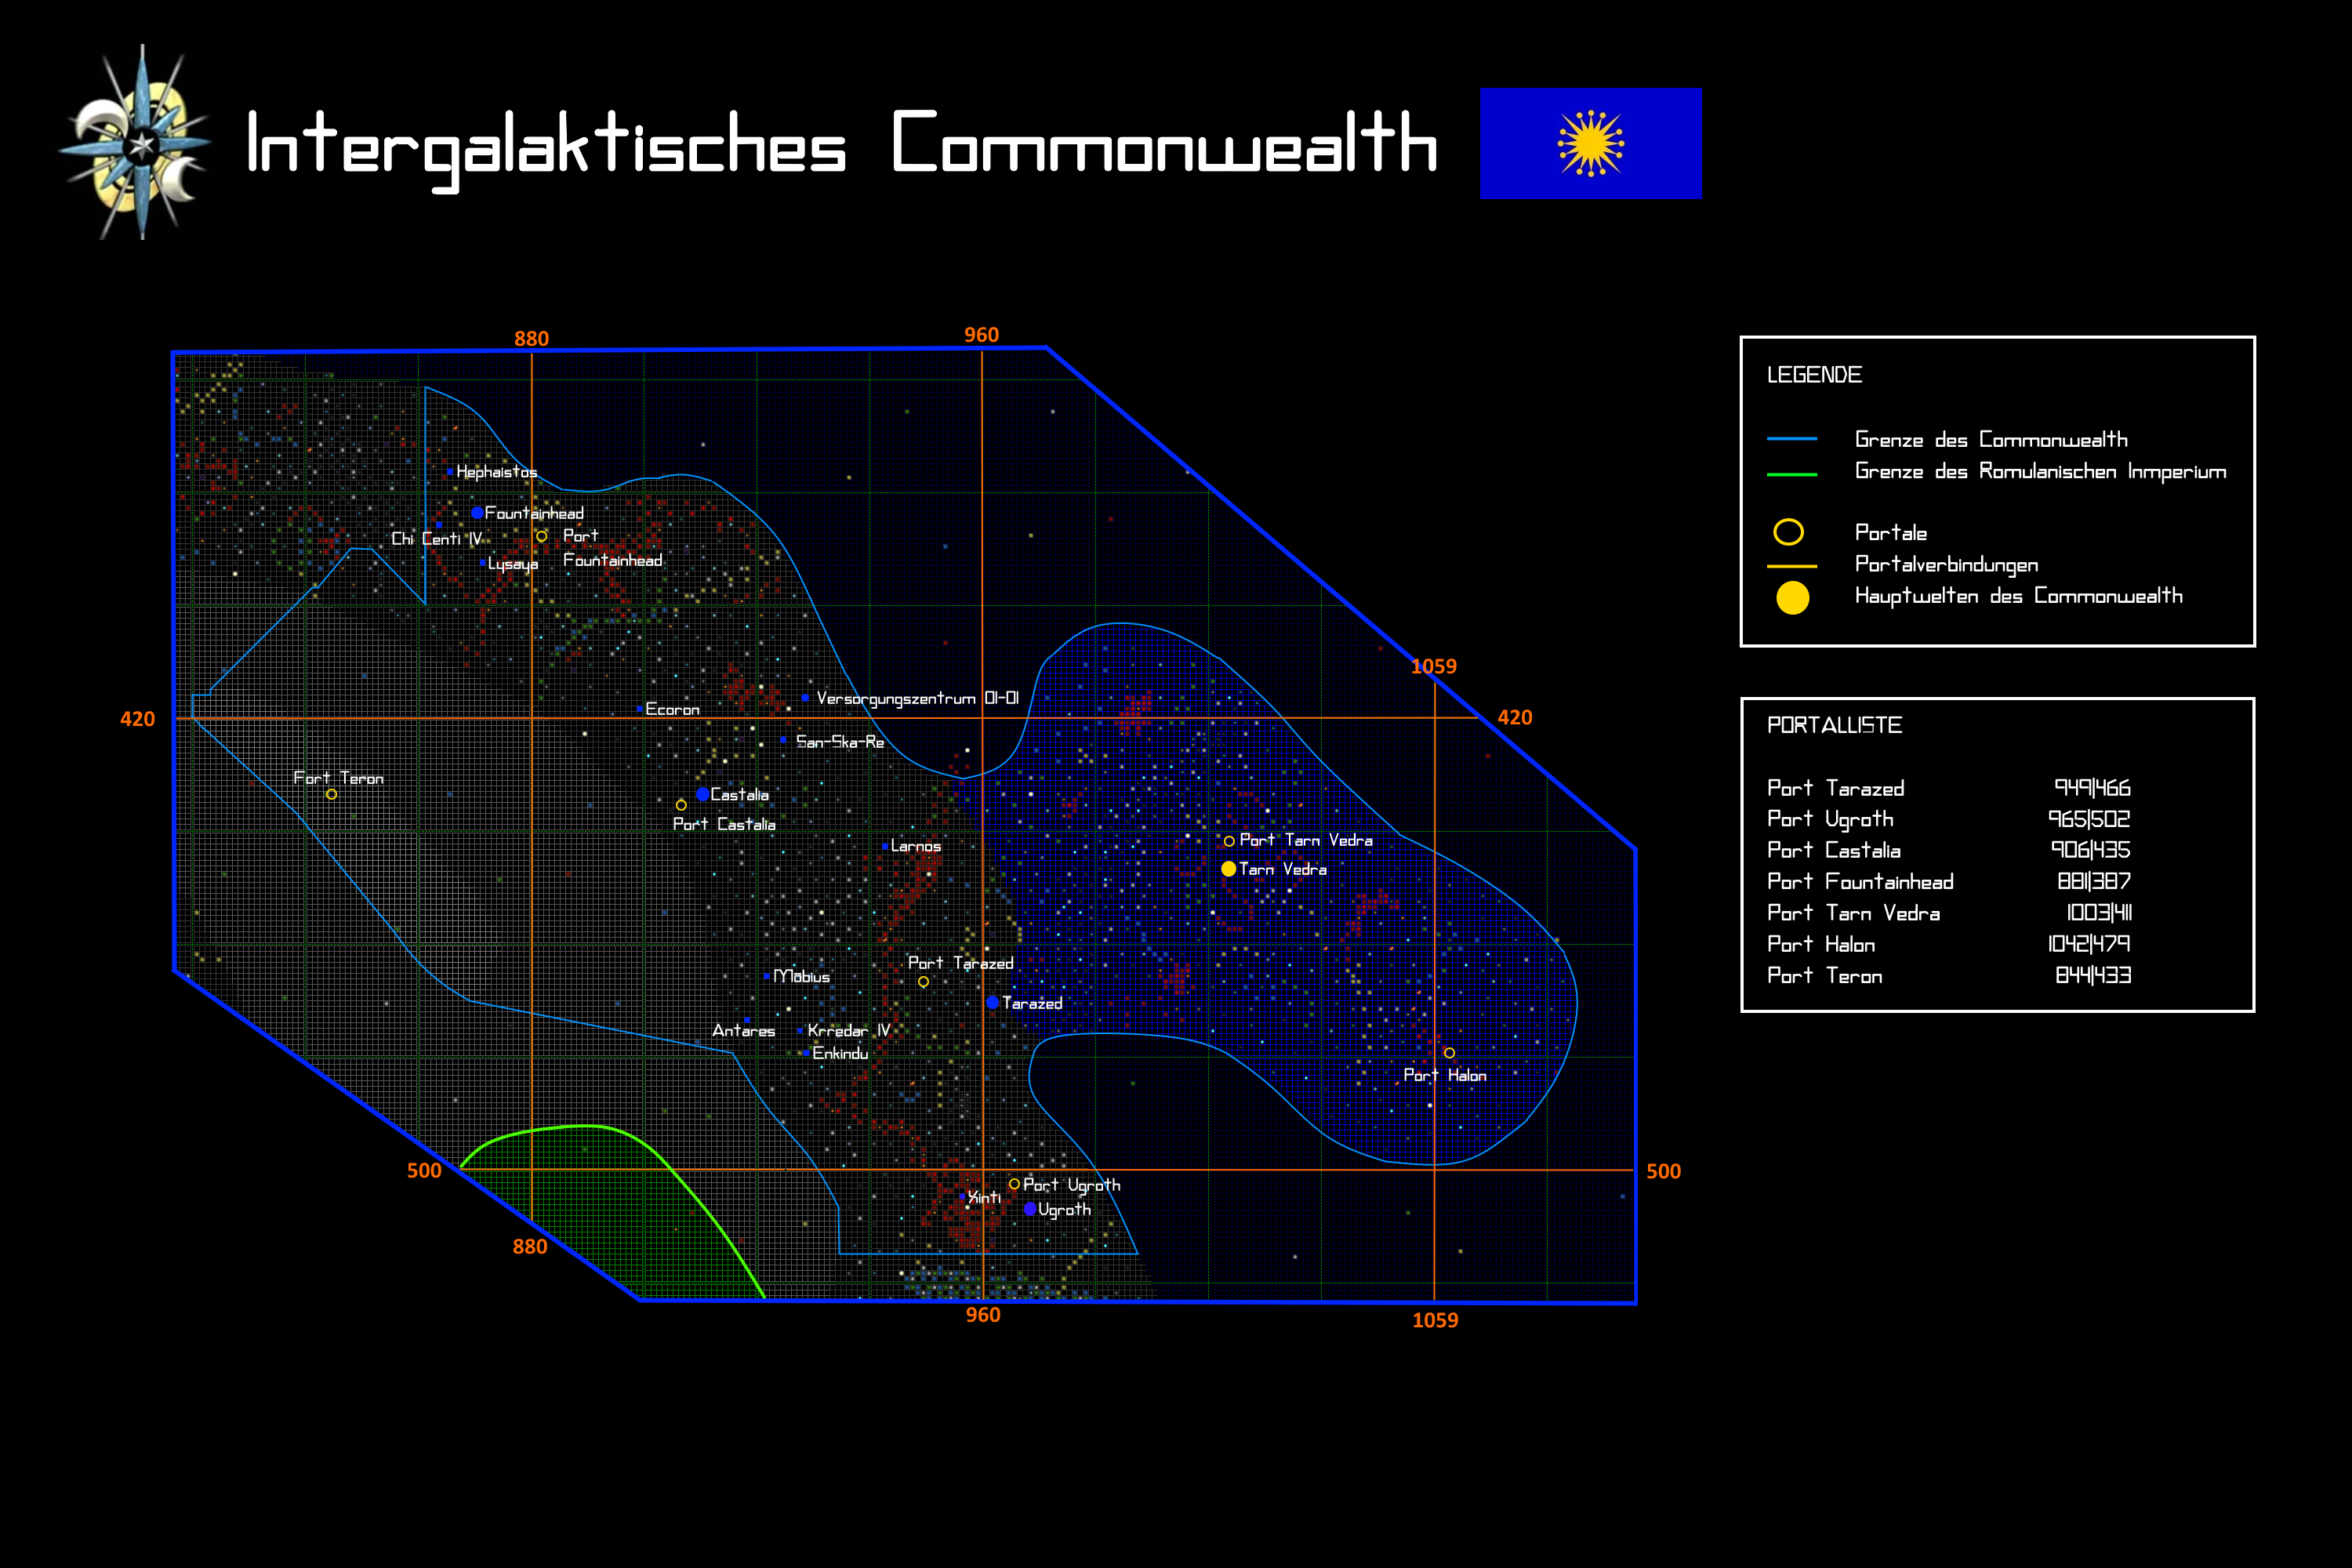 Commonwealth-Netzwerk-Commonwealthraum.png